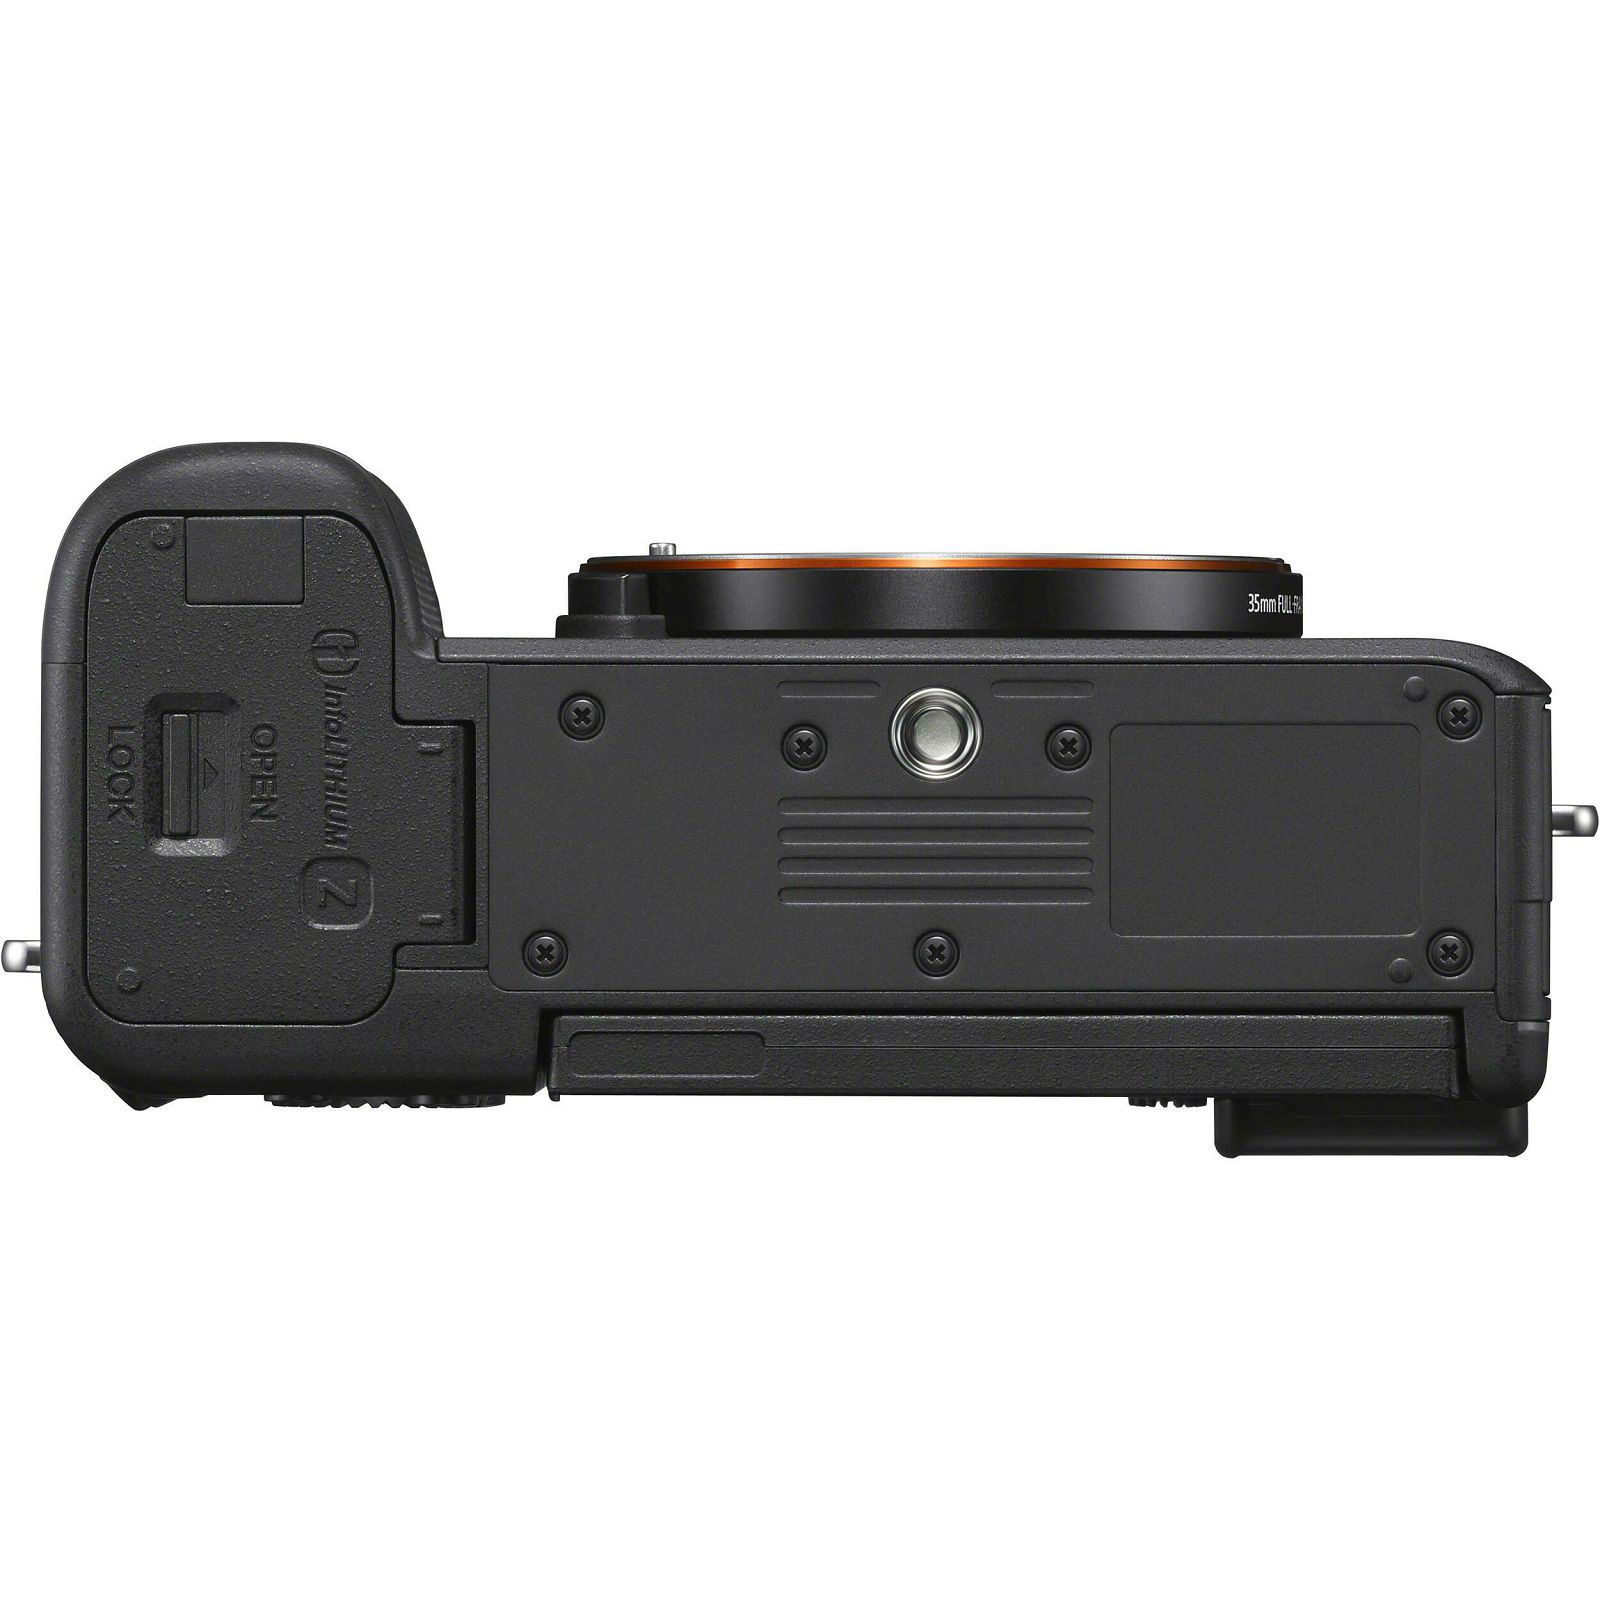 Sony Alpha a7C + FE 28-60mm f/4-5.6 Black crni ILCE-7CLB ILCE7CLB (ILCE7CLB.CEC)